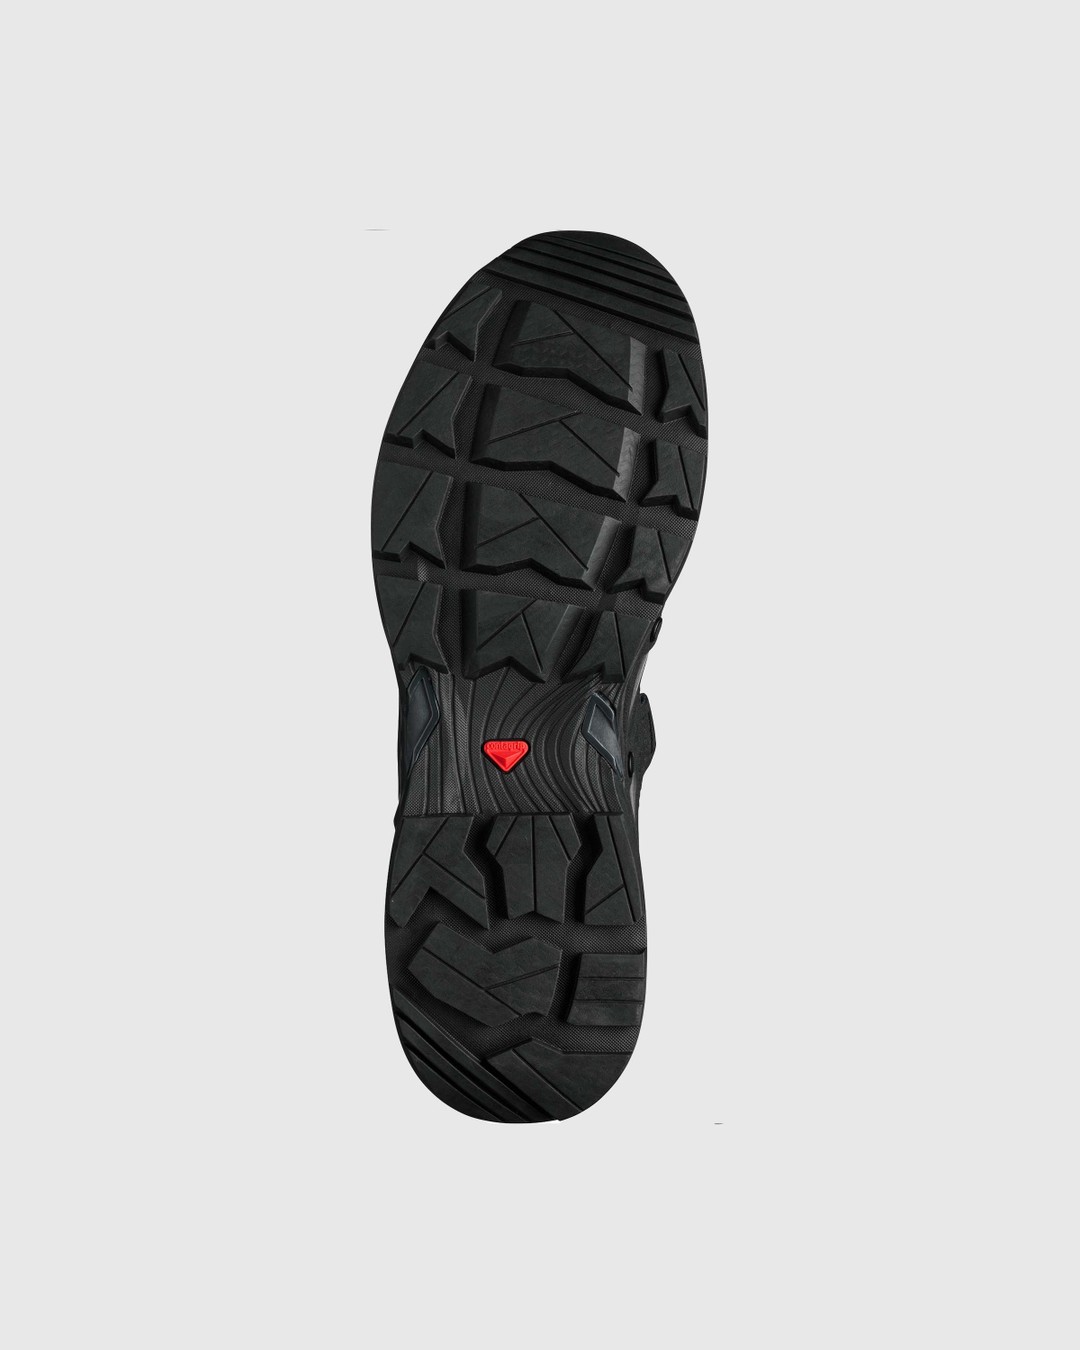 Salomon – Jungle Ultra Low Advanced Black - Low Top Sneakers - Black - Image 5